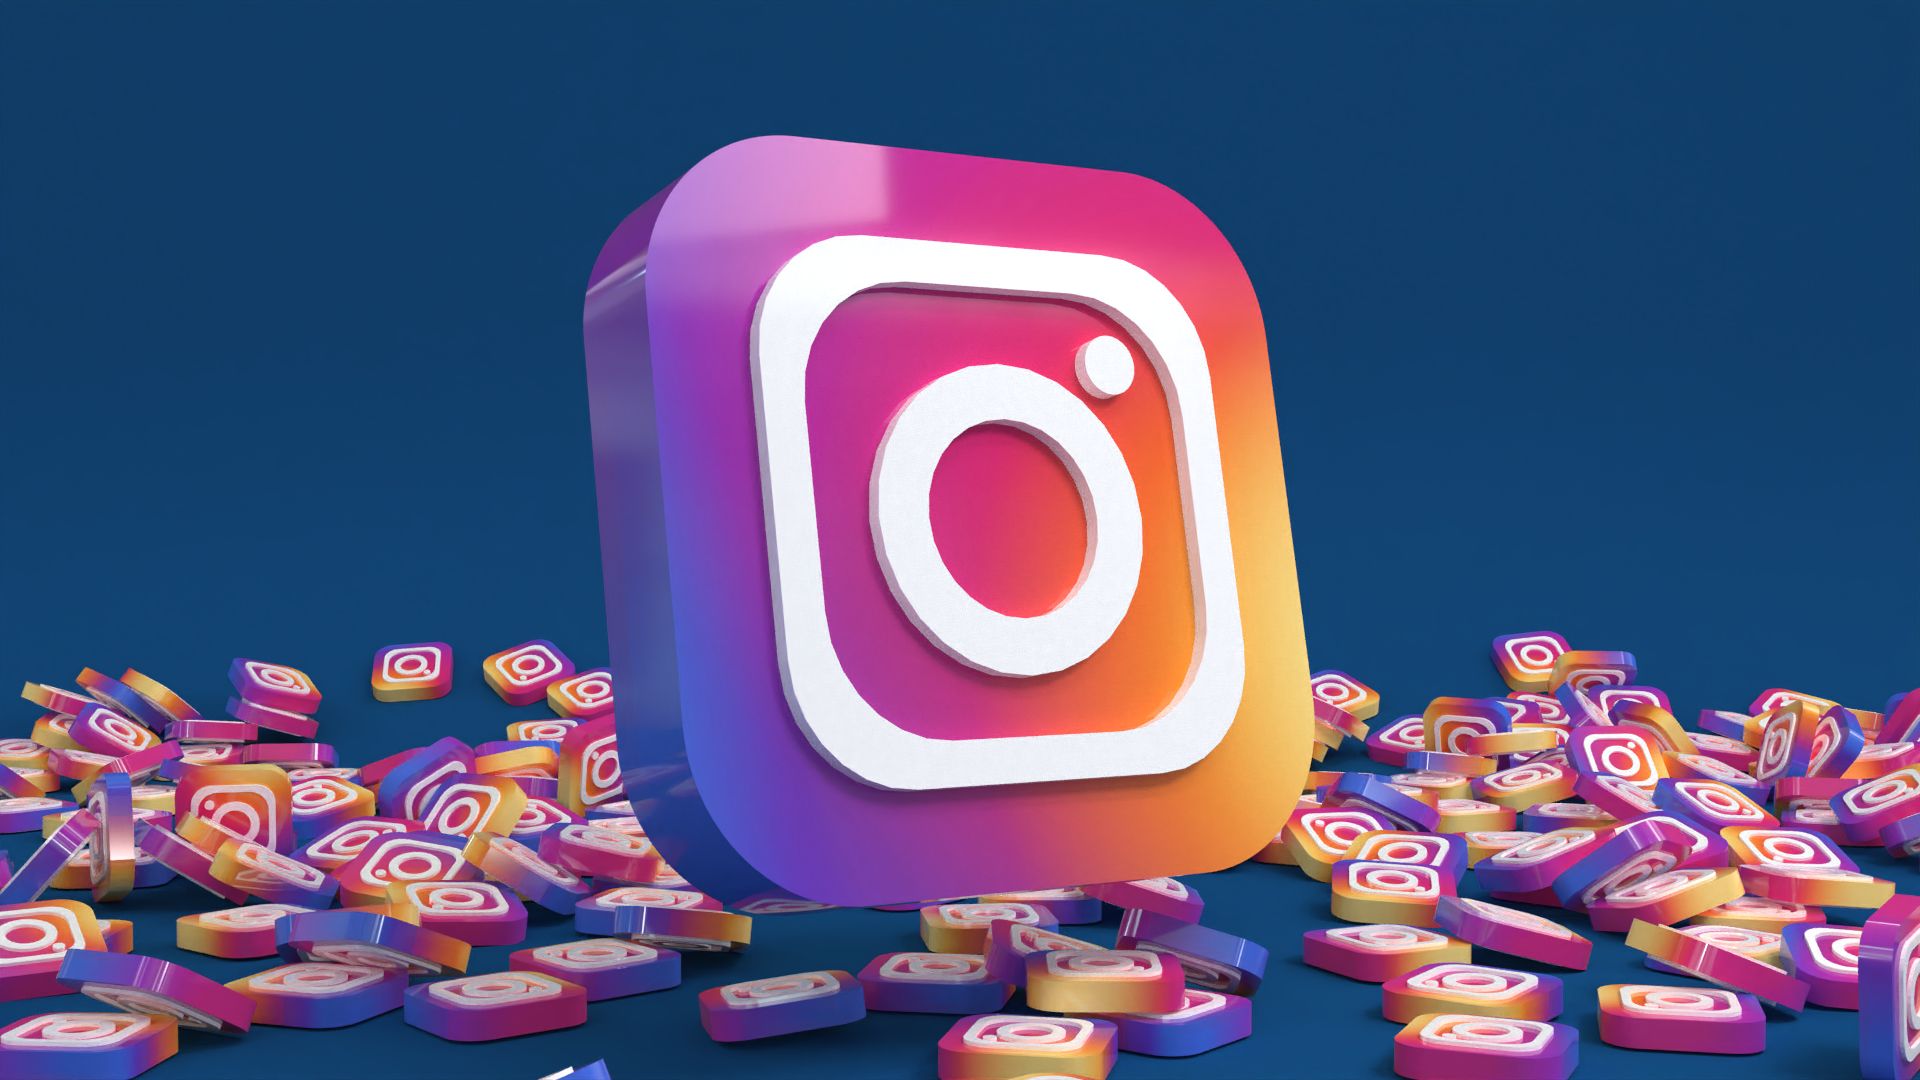 3D social media: instagram icon model